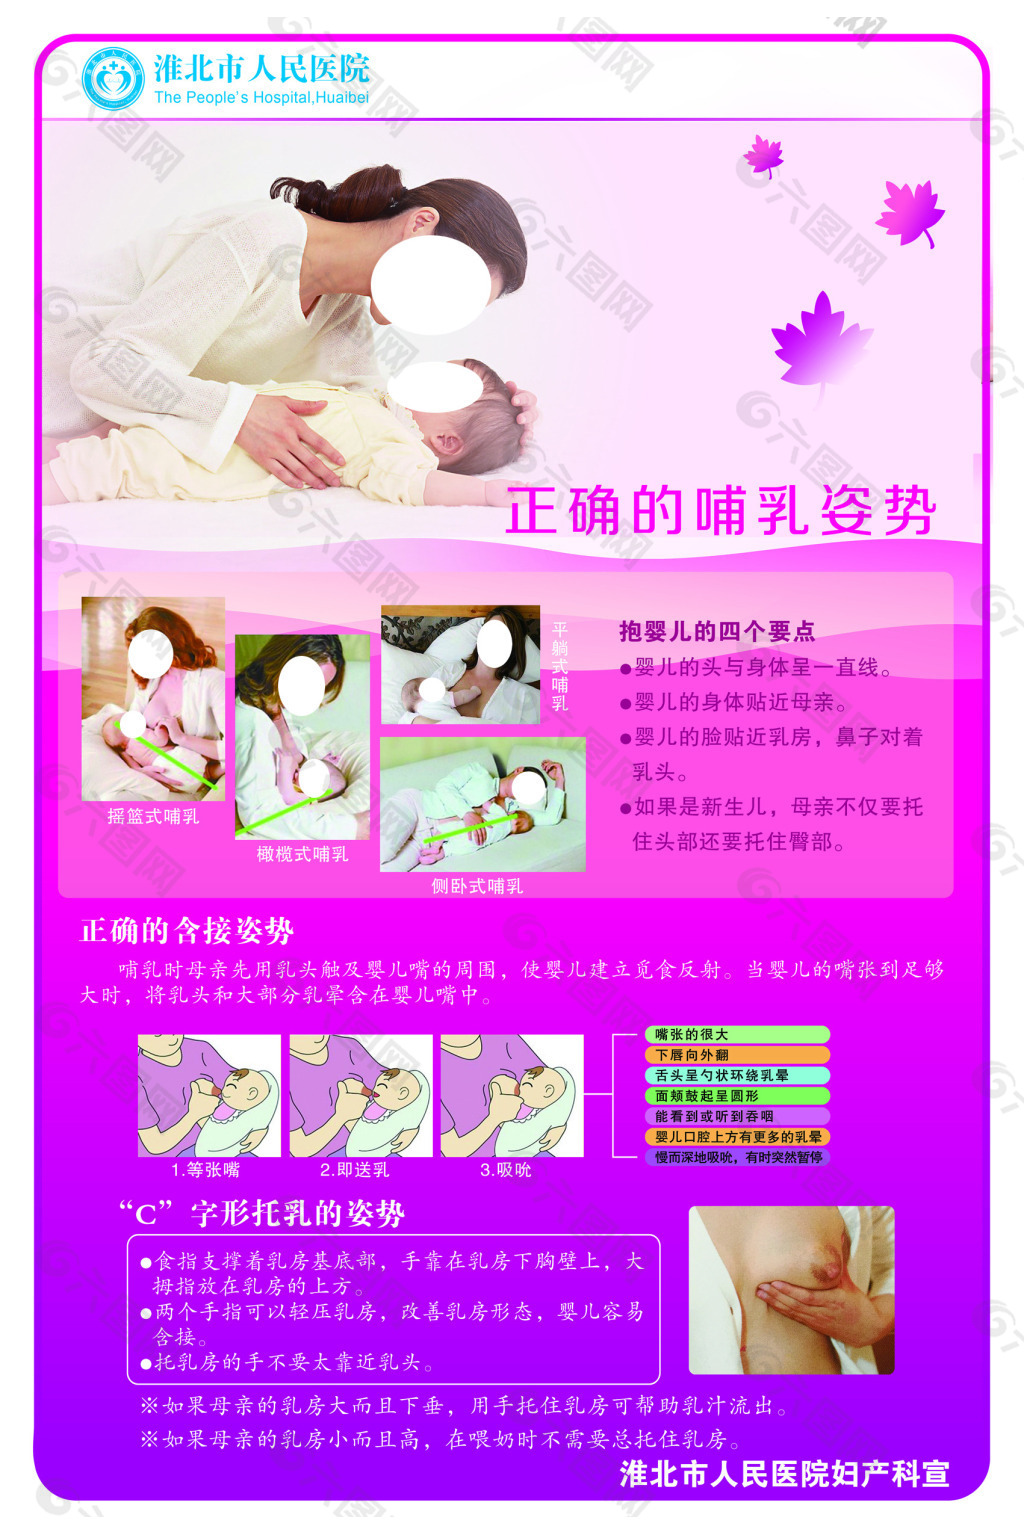 Perfect Breastfeeding & Lactation Set - Beauty Mums & Babies